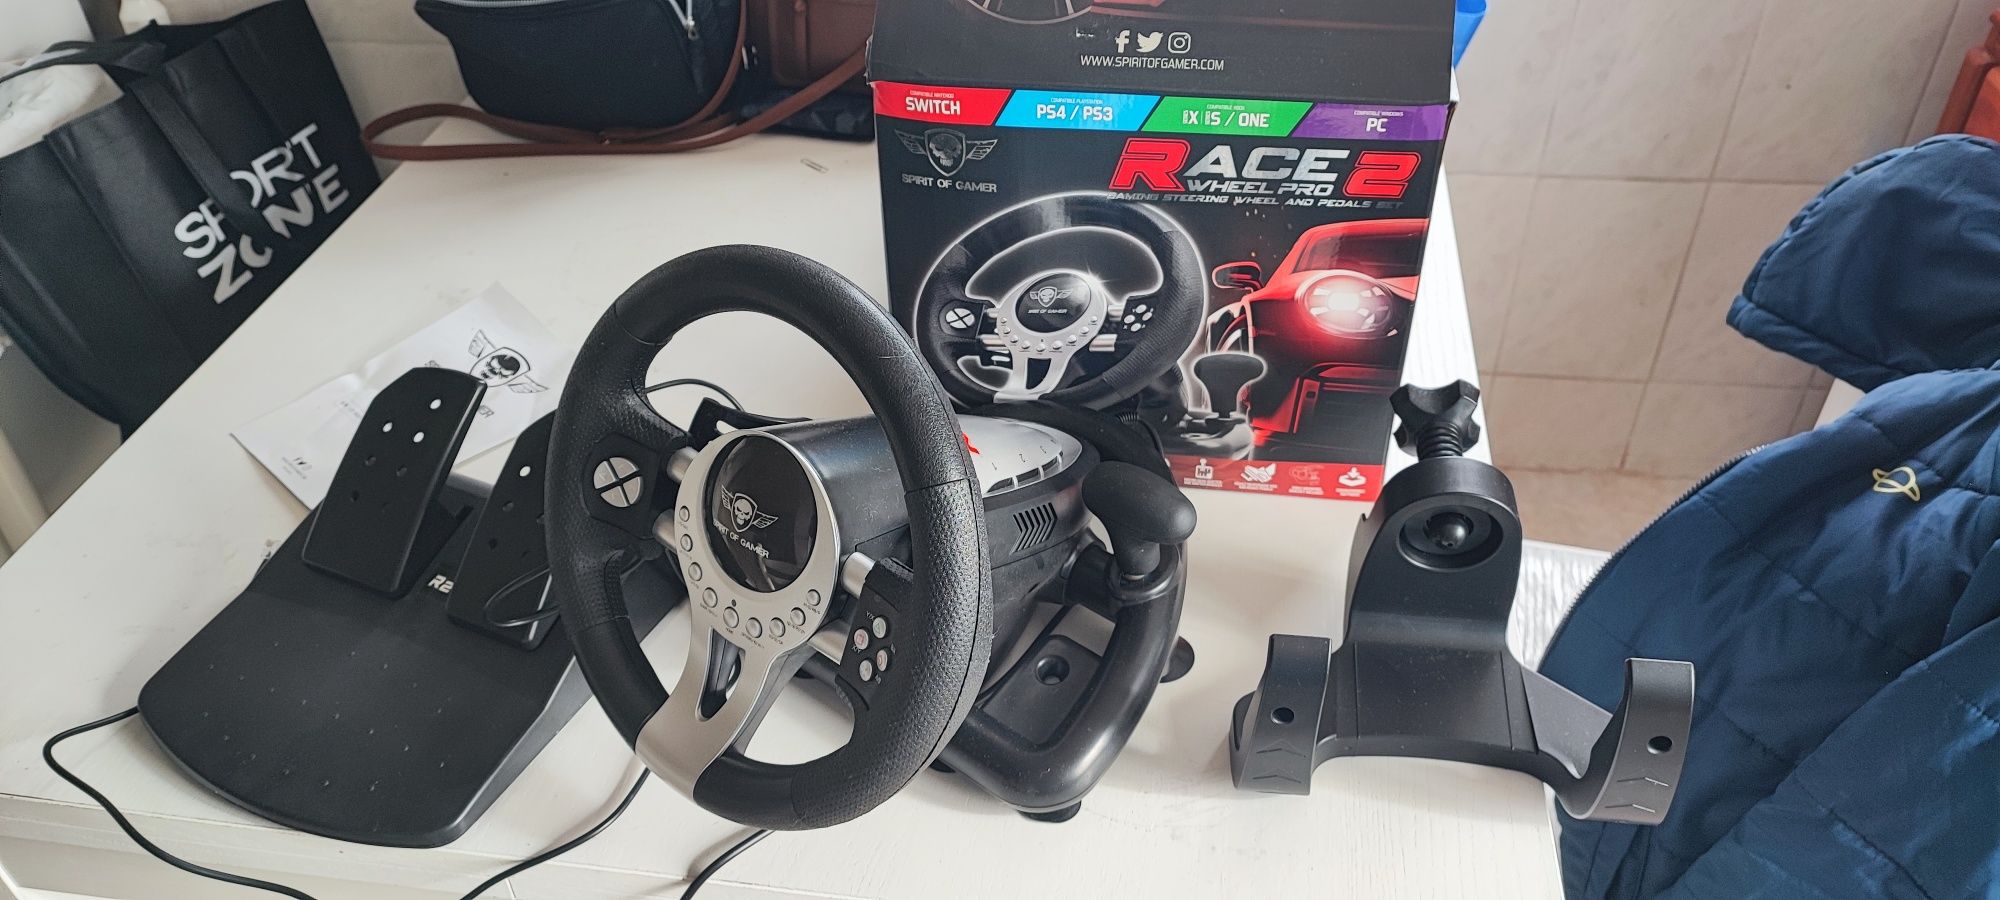 Volante Race  Weel pro2 para PS4, PC, Xbox, Switch